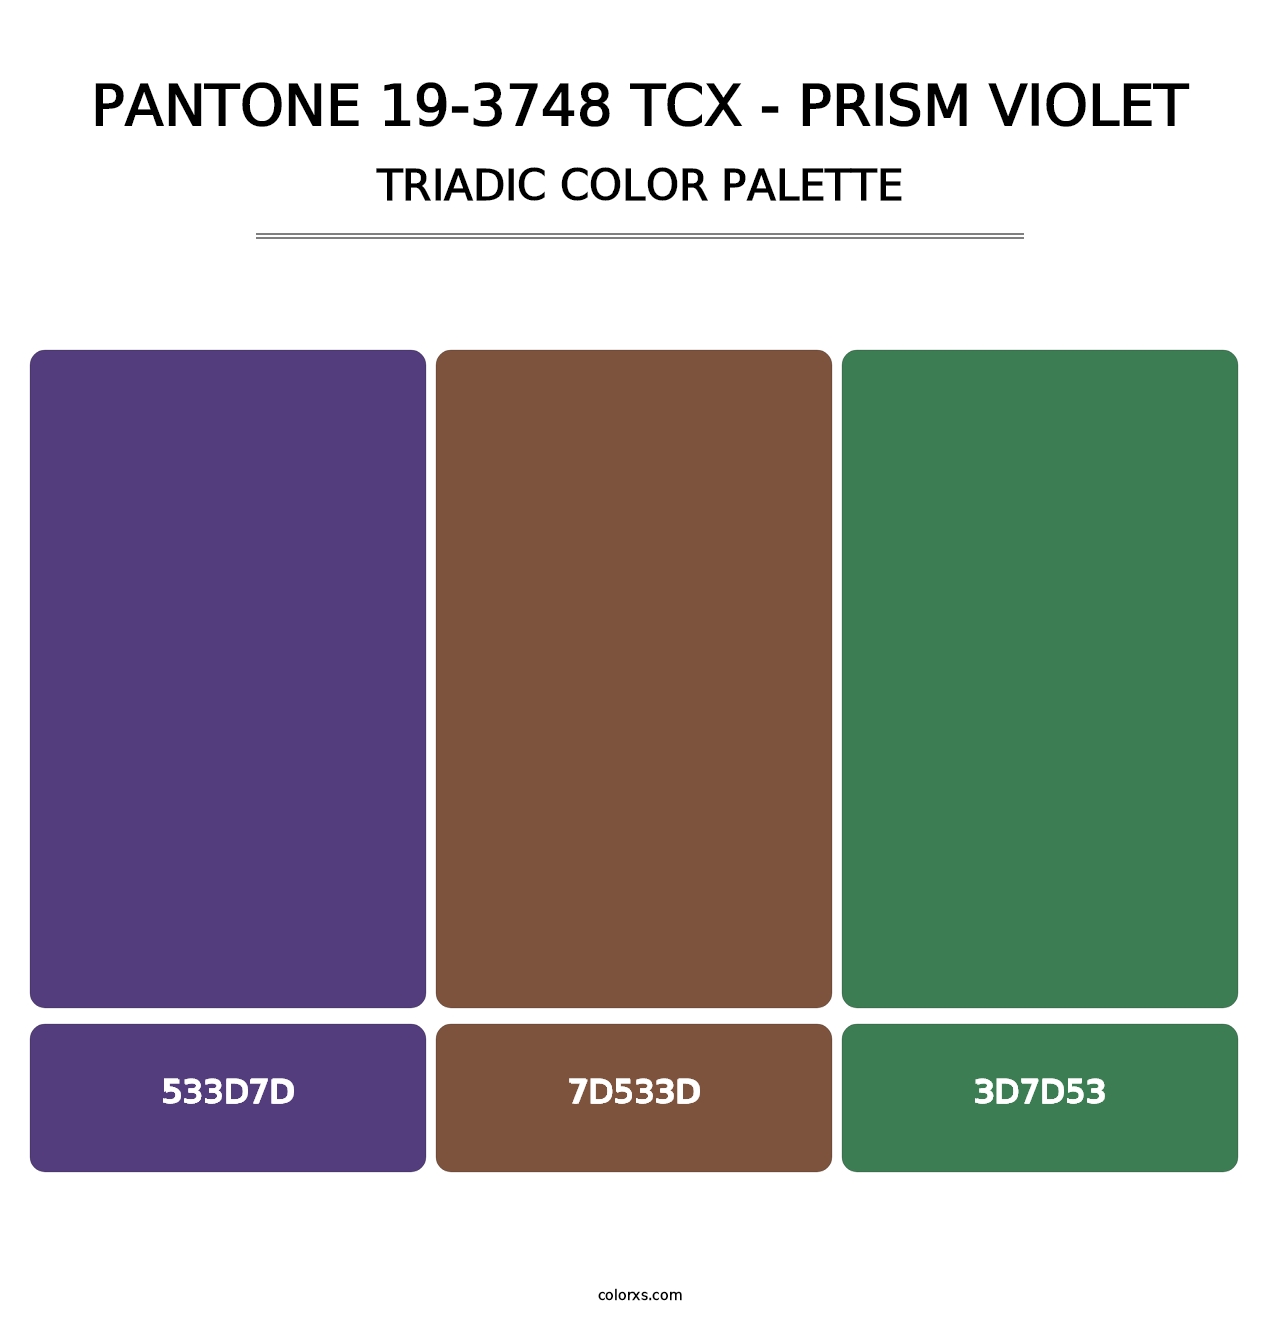 PANTONE 19-3748 TCX - Prism Violet - Triadic Color Palette